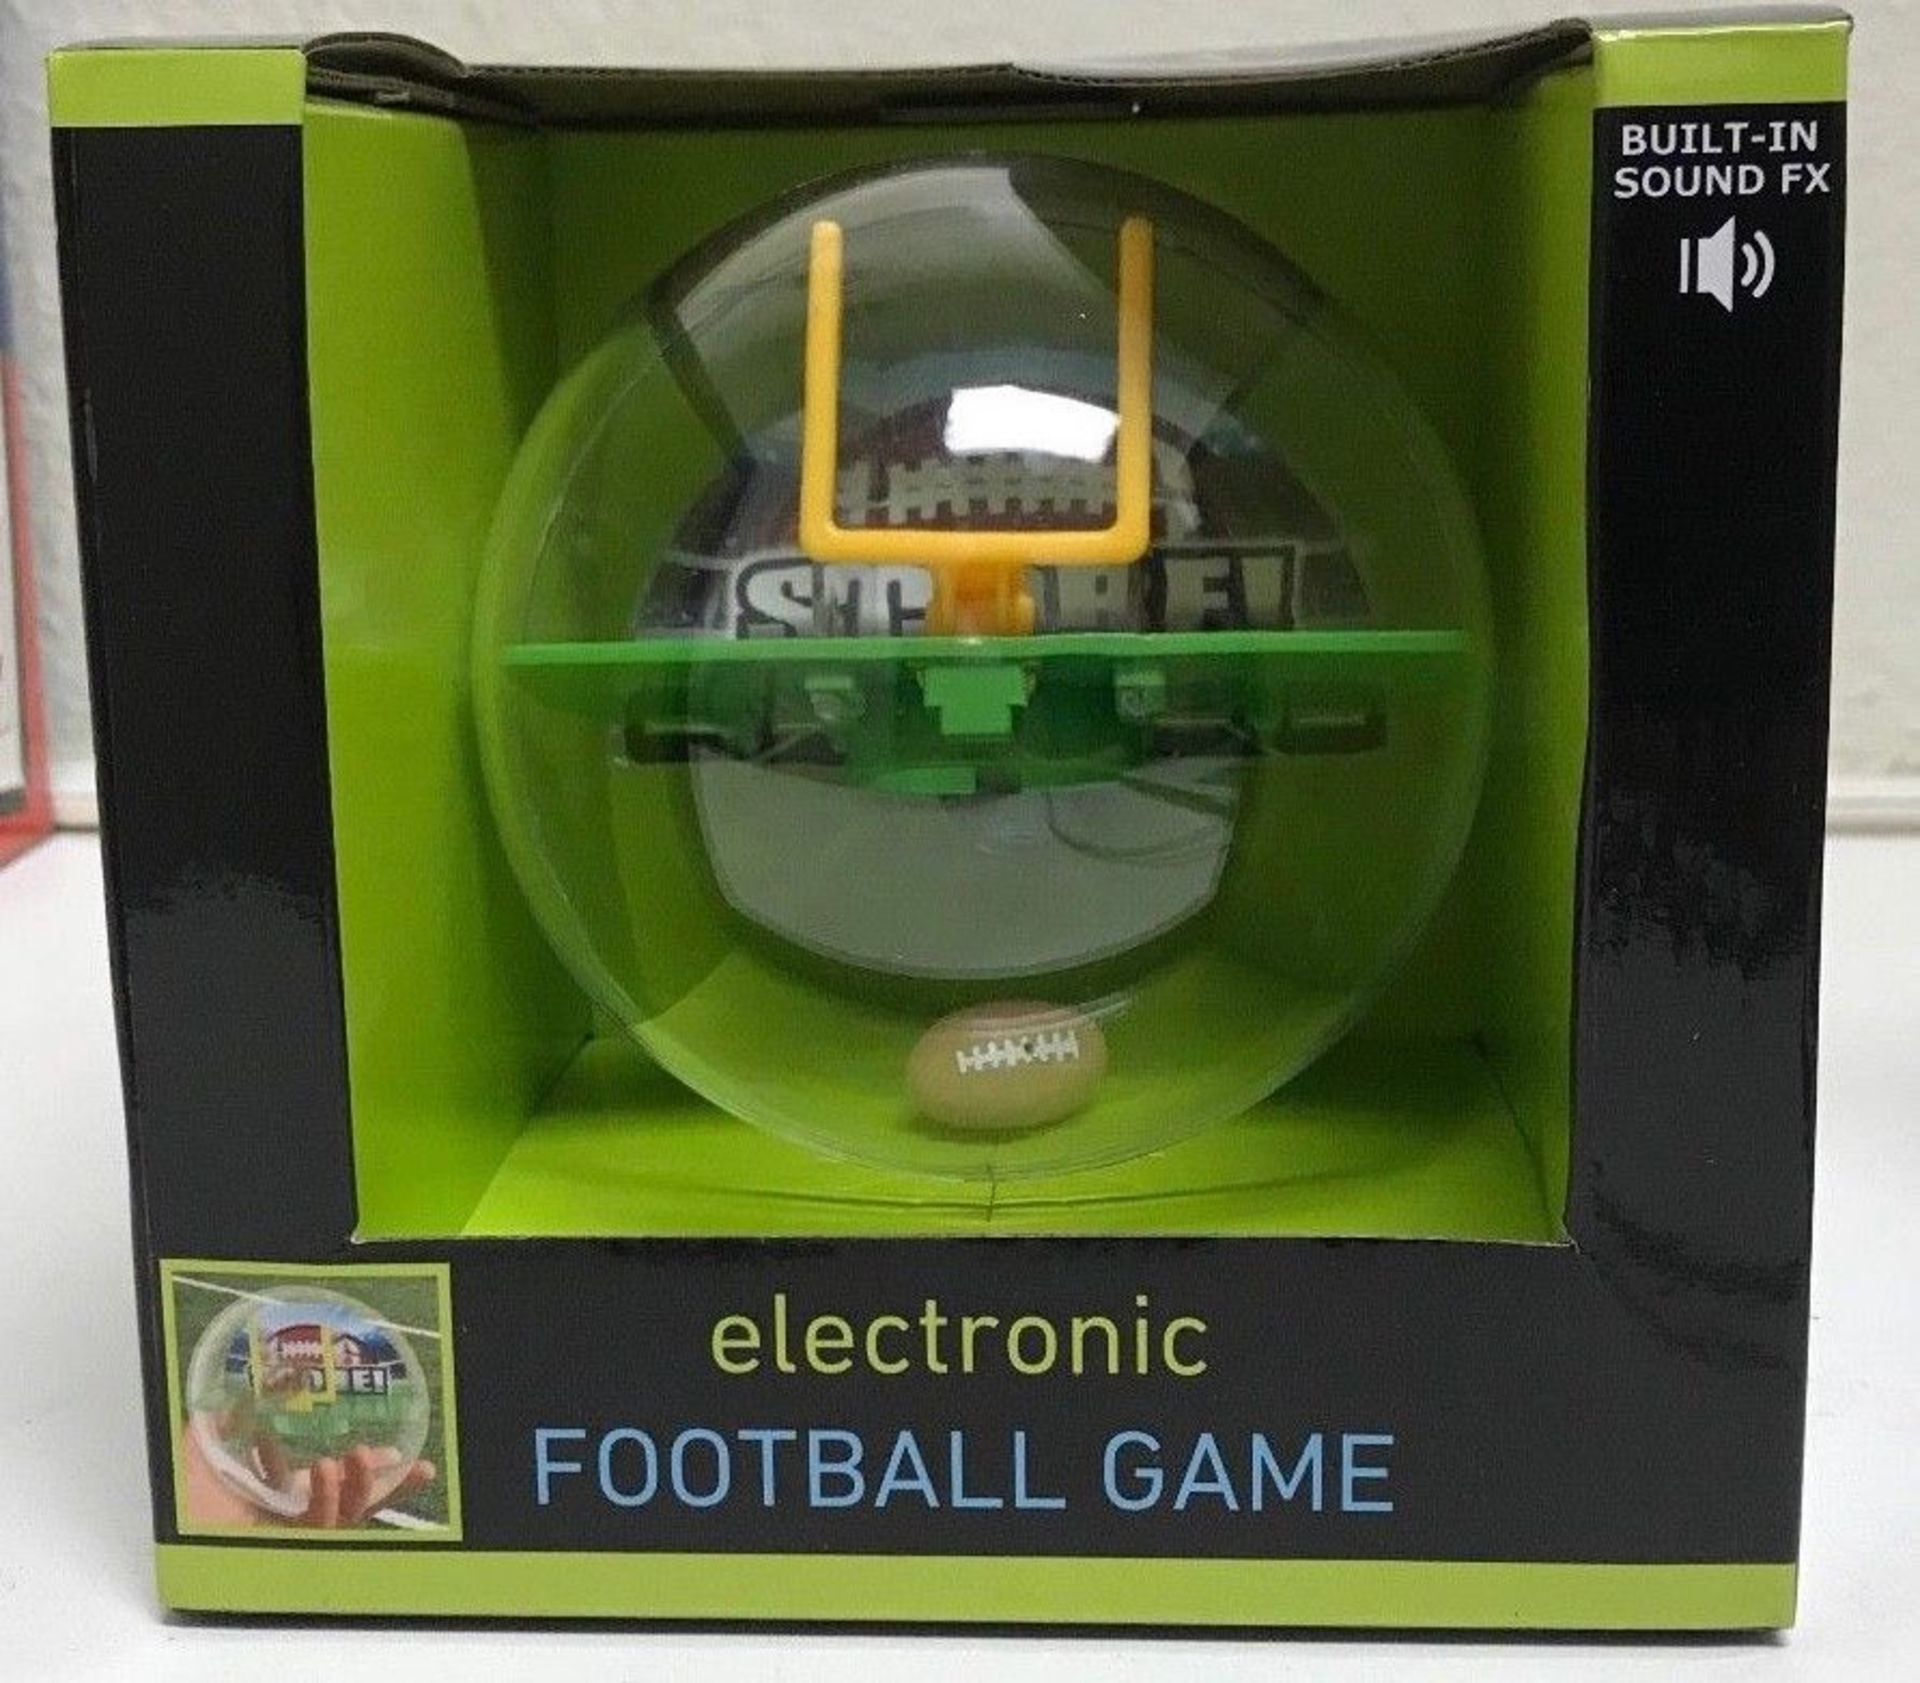 LOT OF 10 NEW! Sharper Image Electronic Football Game + Built in Speaker!!!